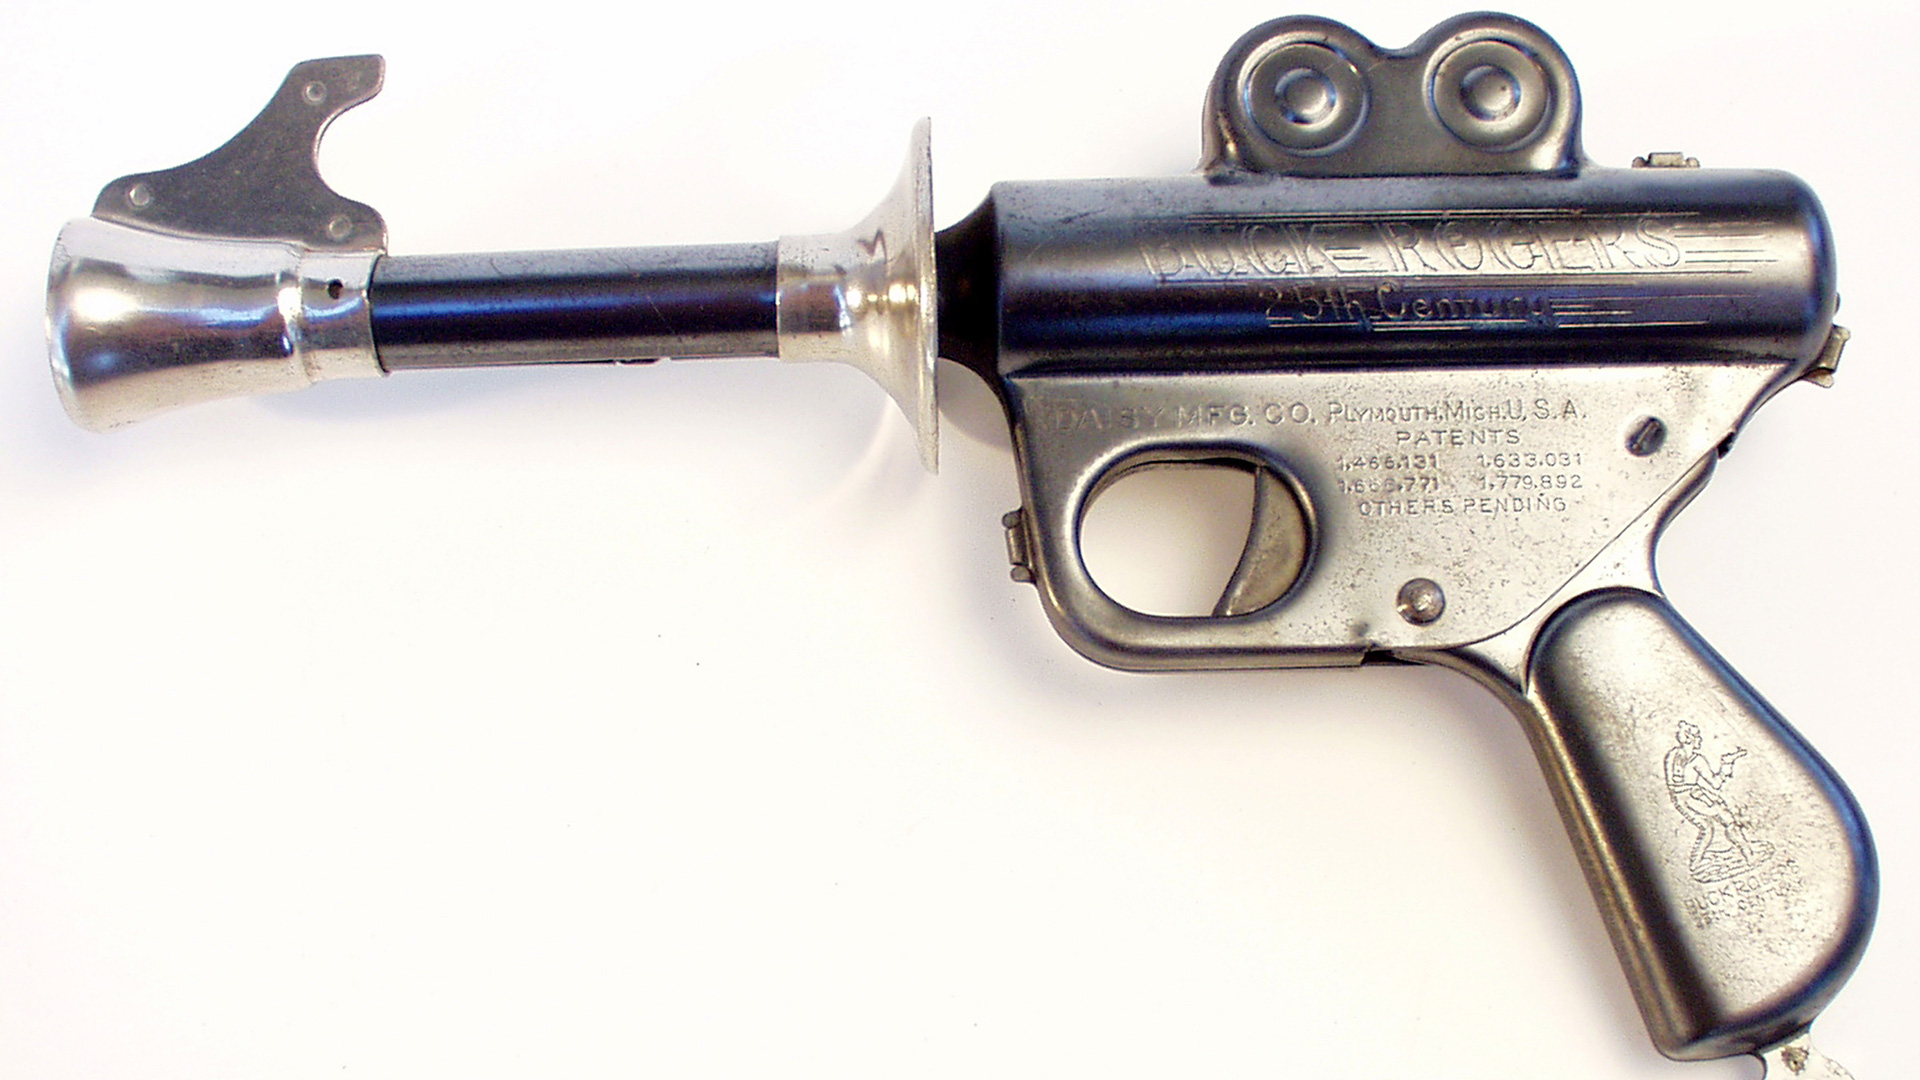 6 Orange toy gun plugs safety allow the sale cap guns & replica toy gun parts 